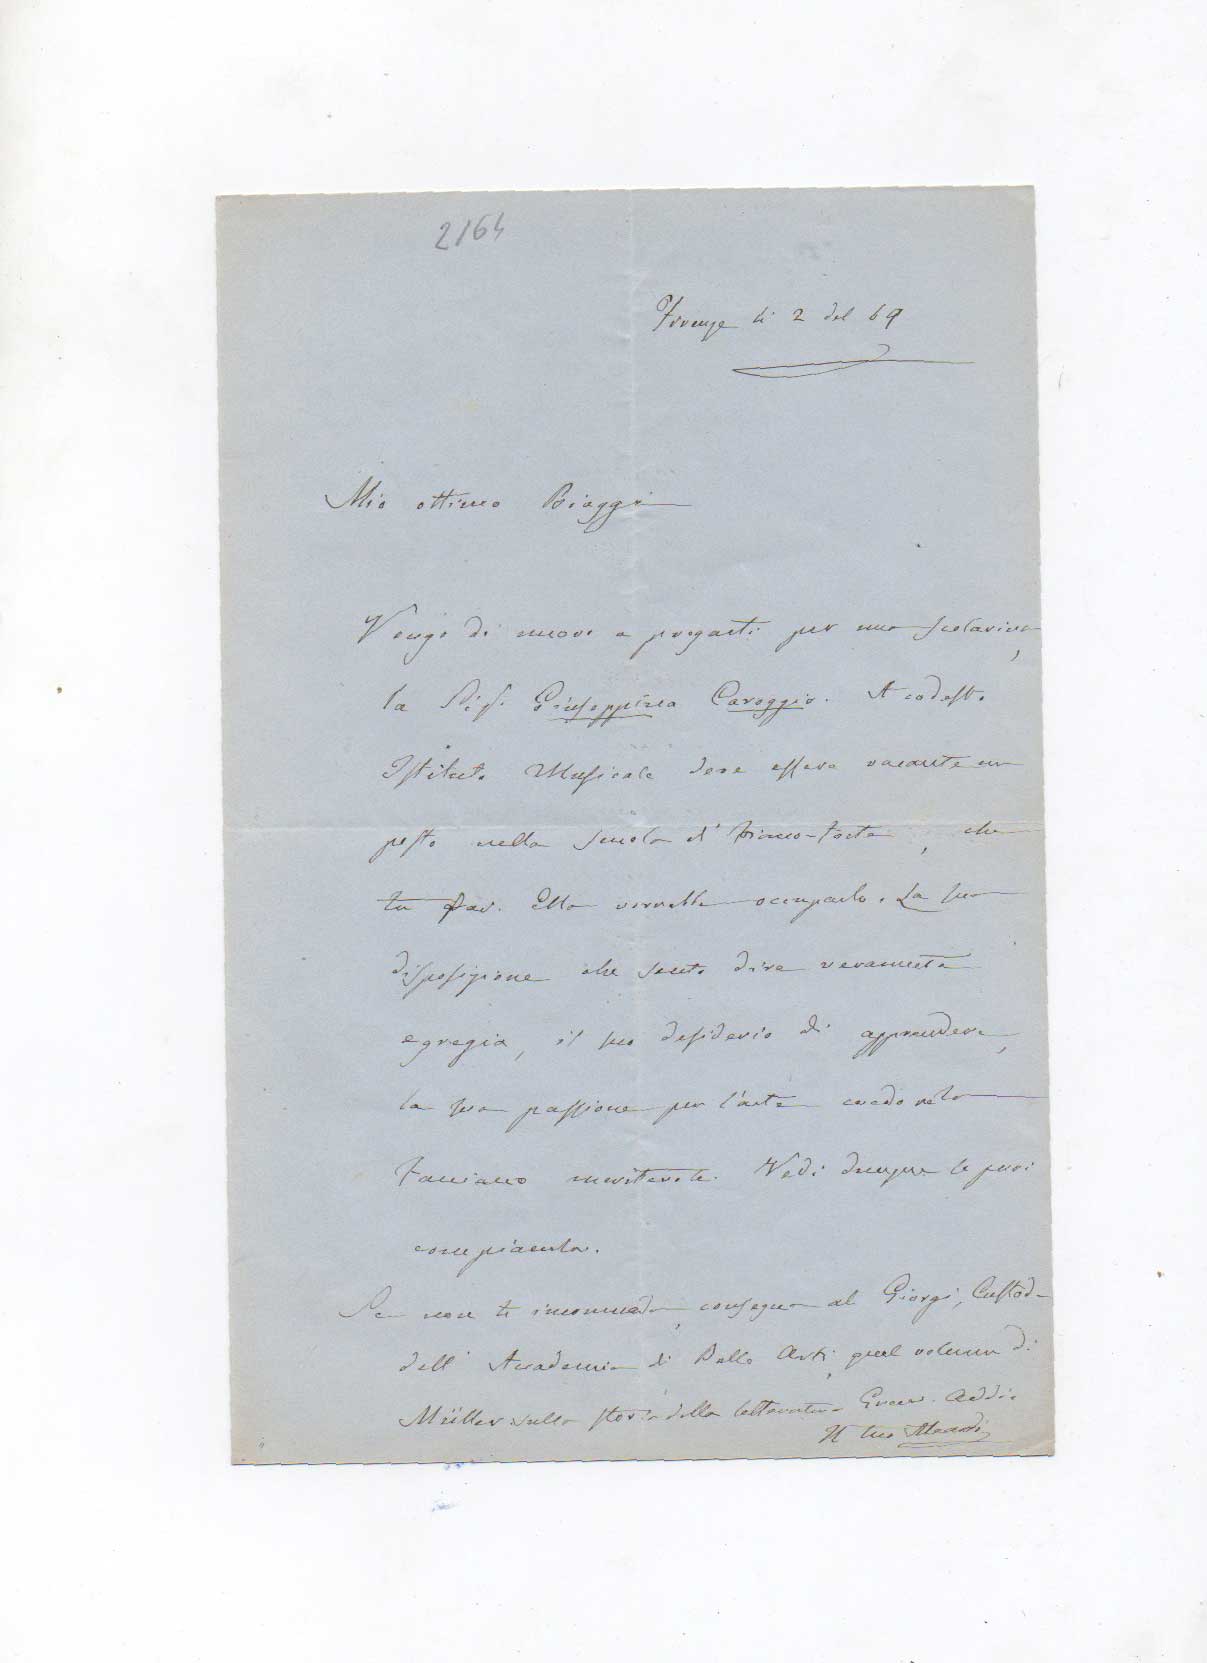 lettera autografa firmata al sig.r biaggi. datata 4 febbraio 1869, firenze